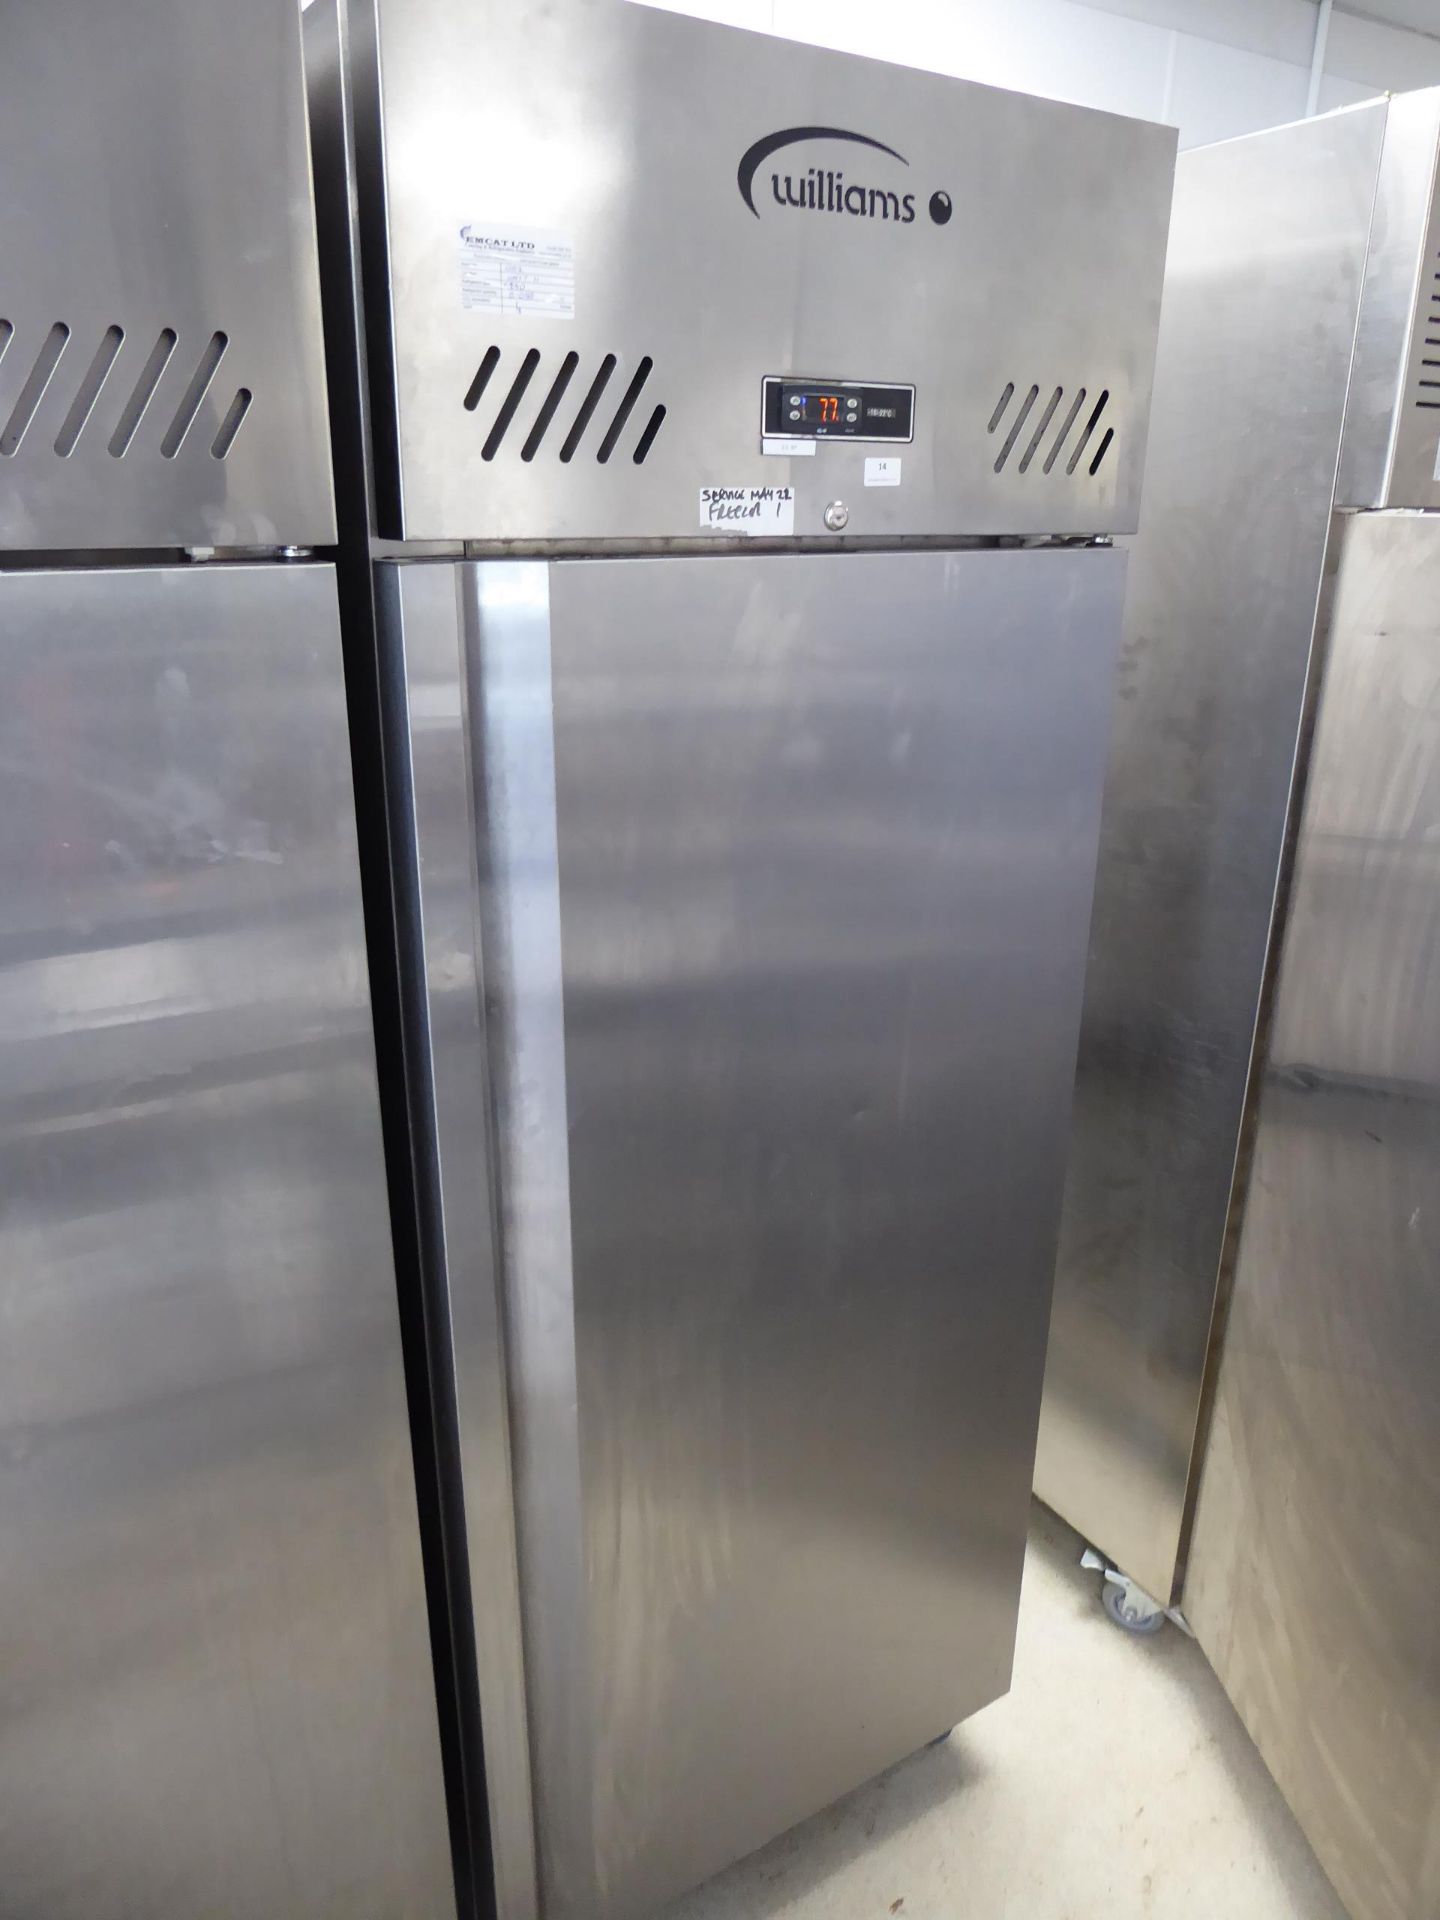 * Williams single door upright freezer LJ1SA - contains 600 x 400 S/S bakery rack